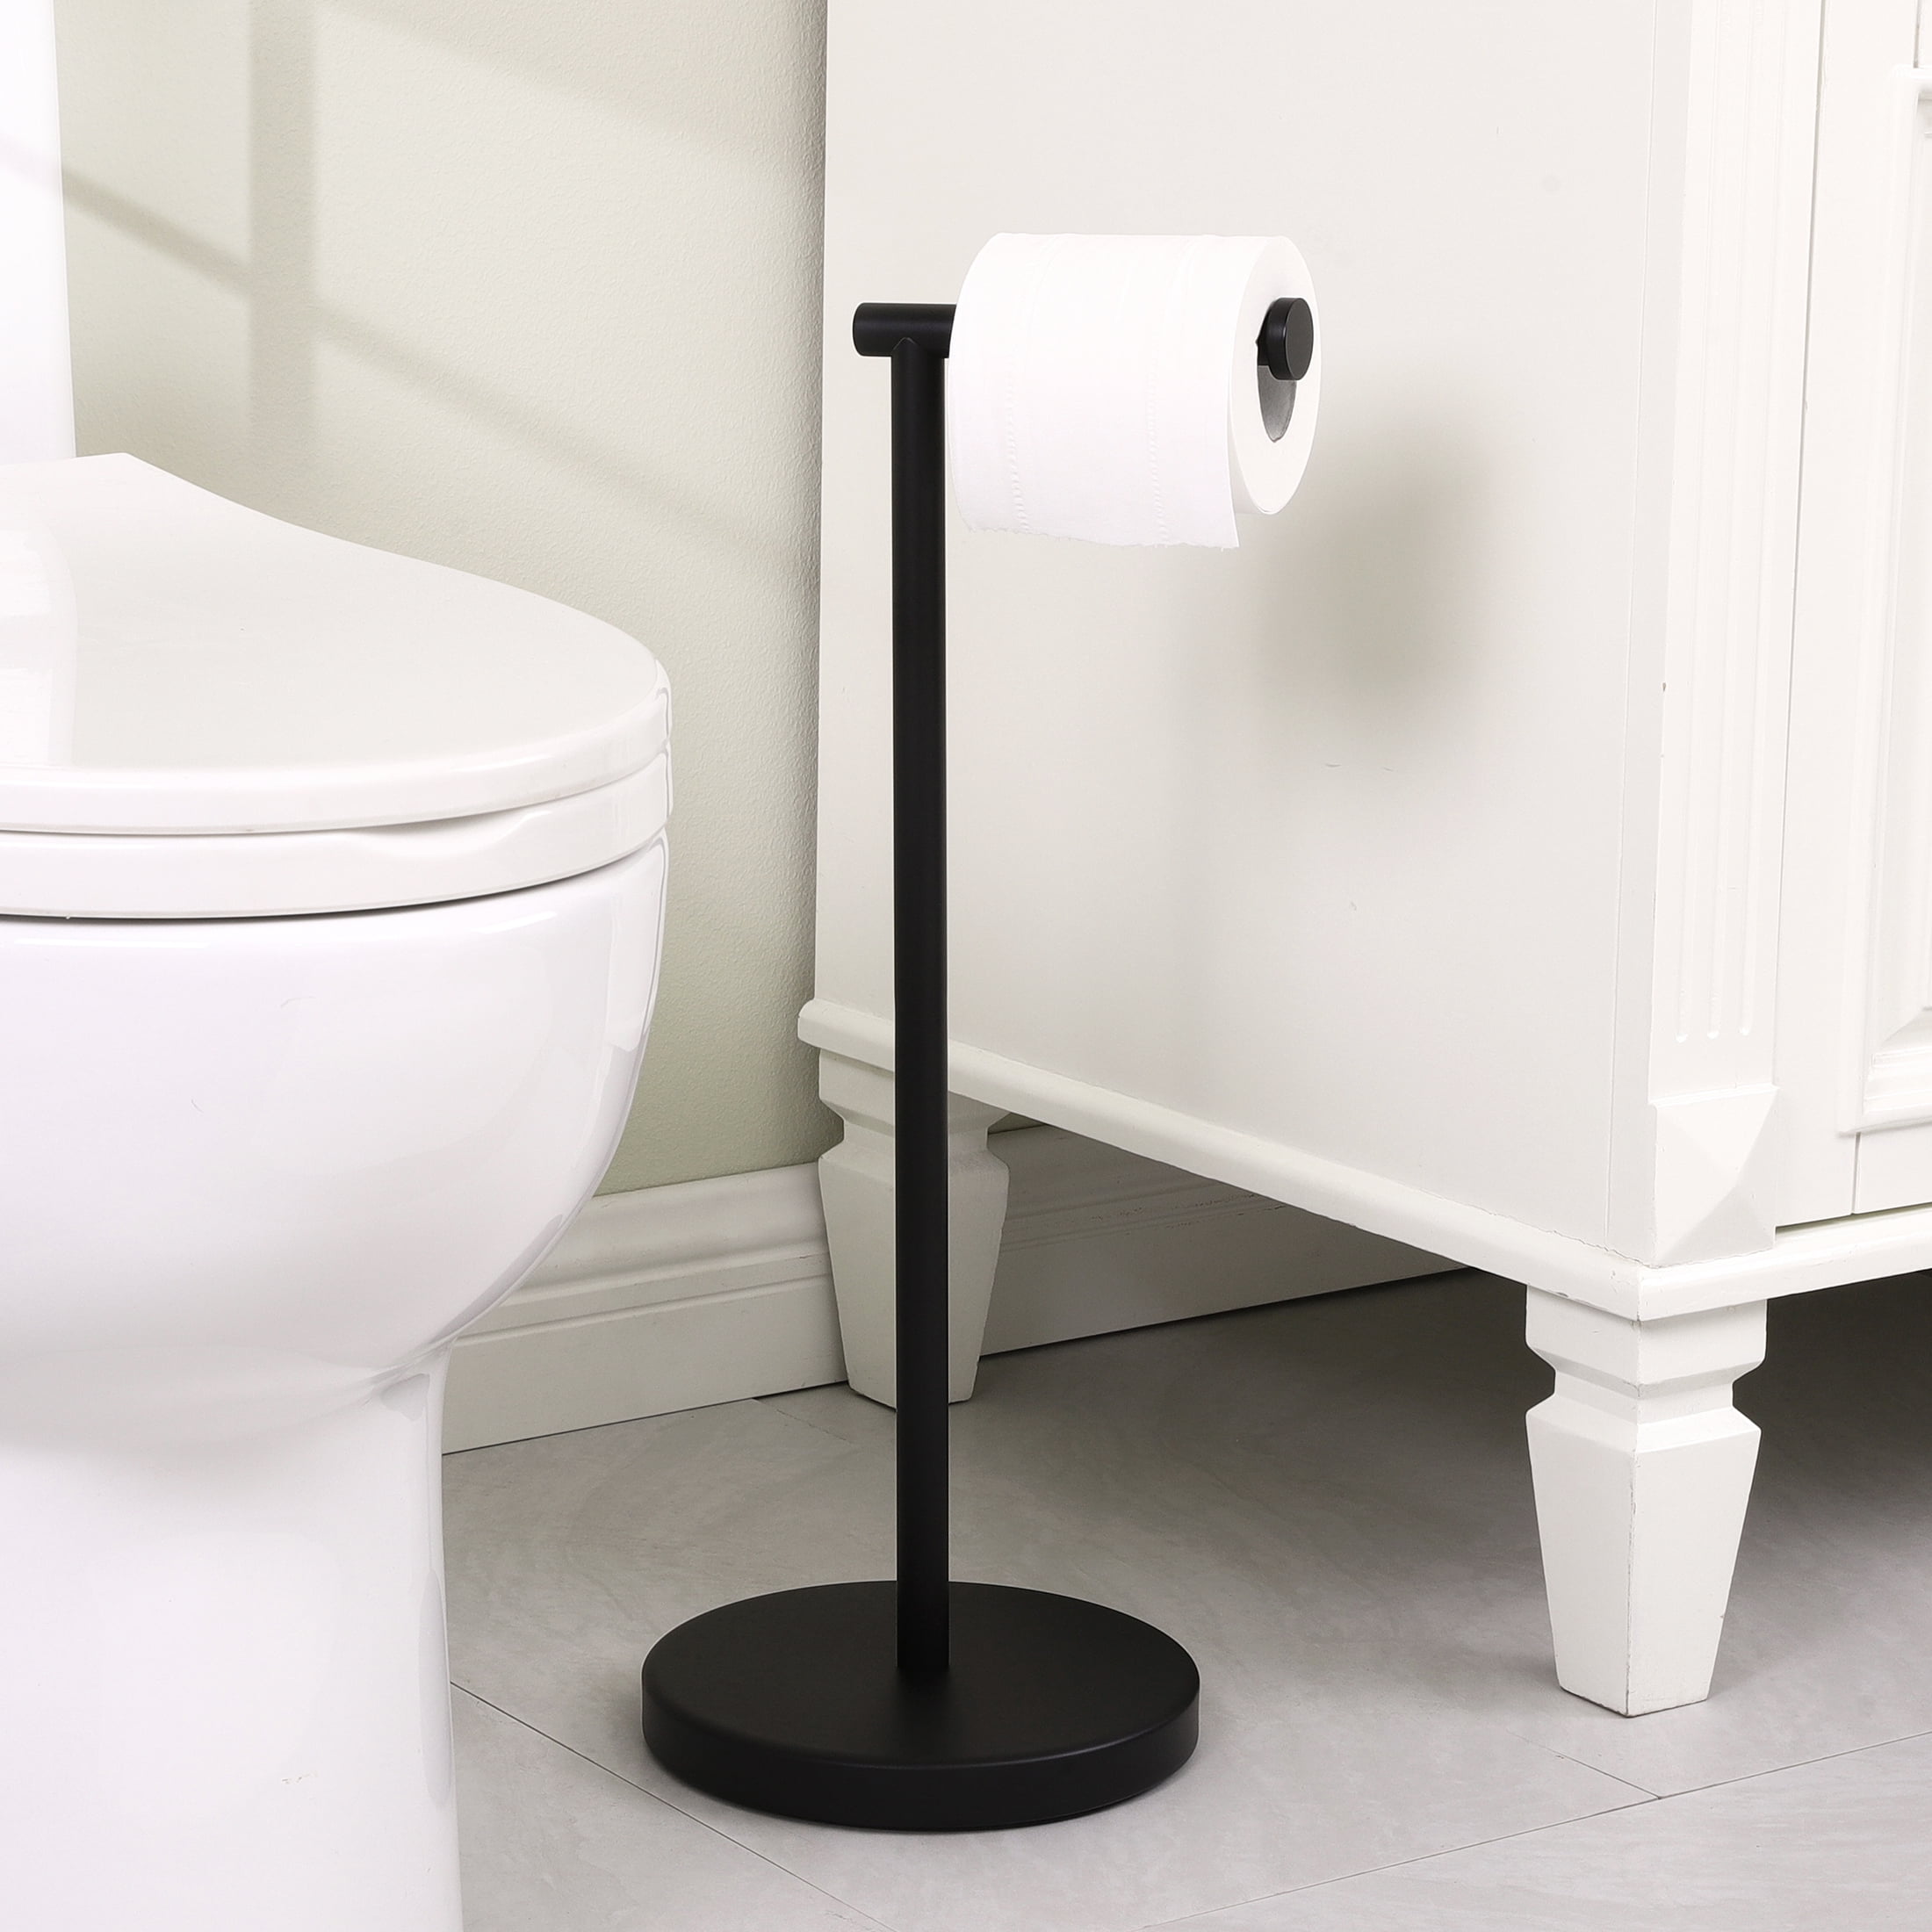 Kimzcn kimzcn matte black toilet paper holder stand toilet paper roll holder  with shelf reserve free standing portable tissue storag